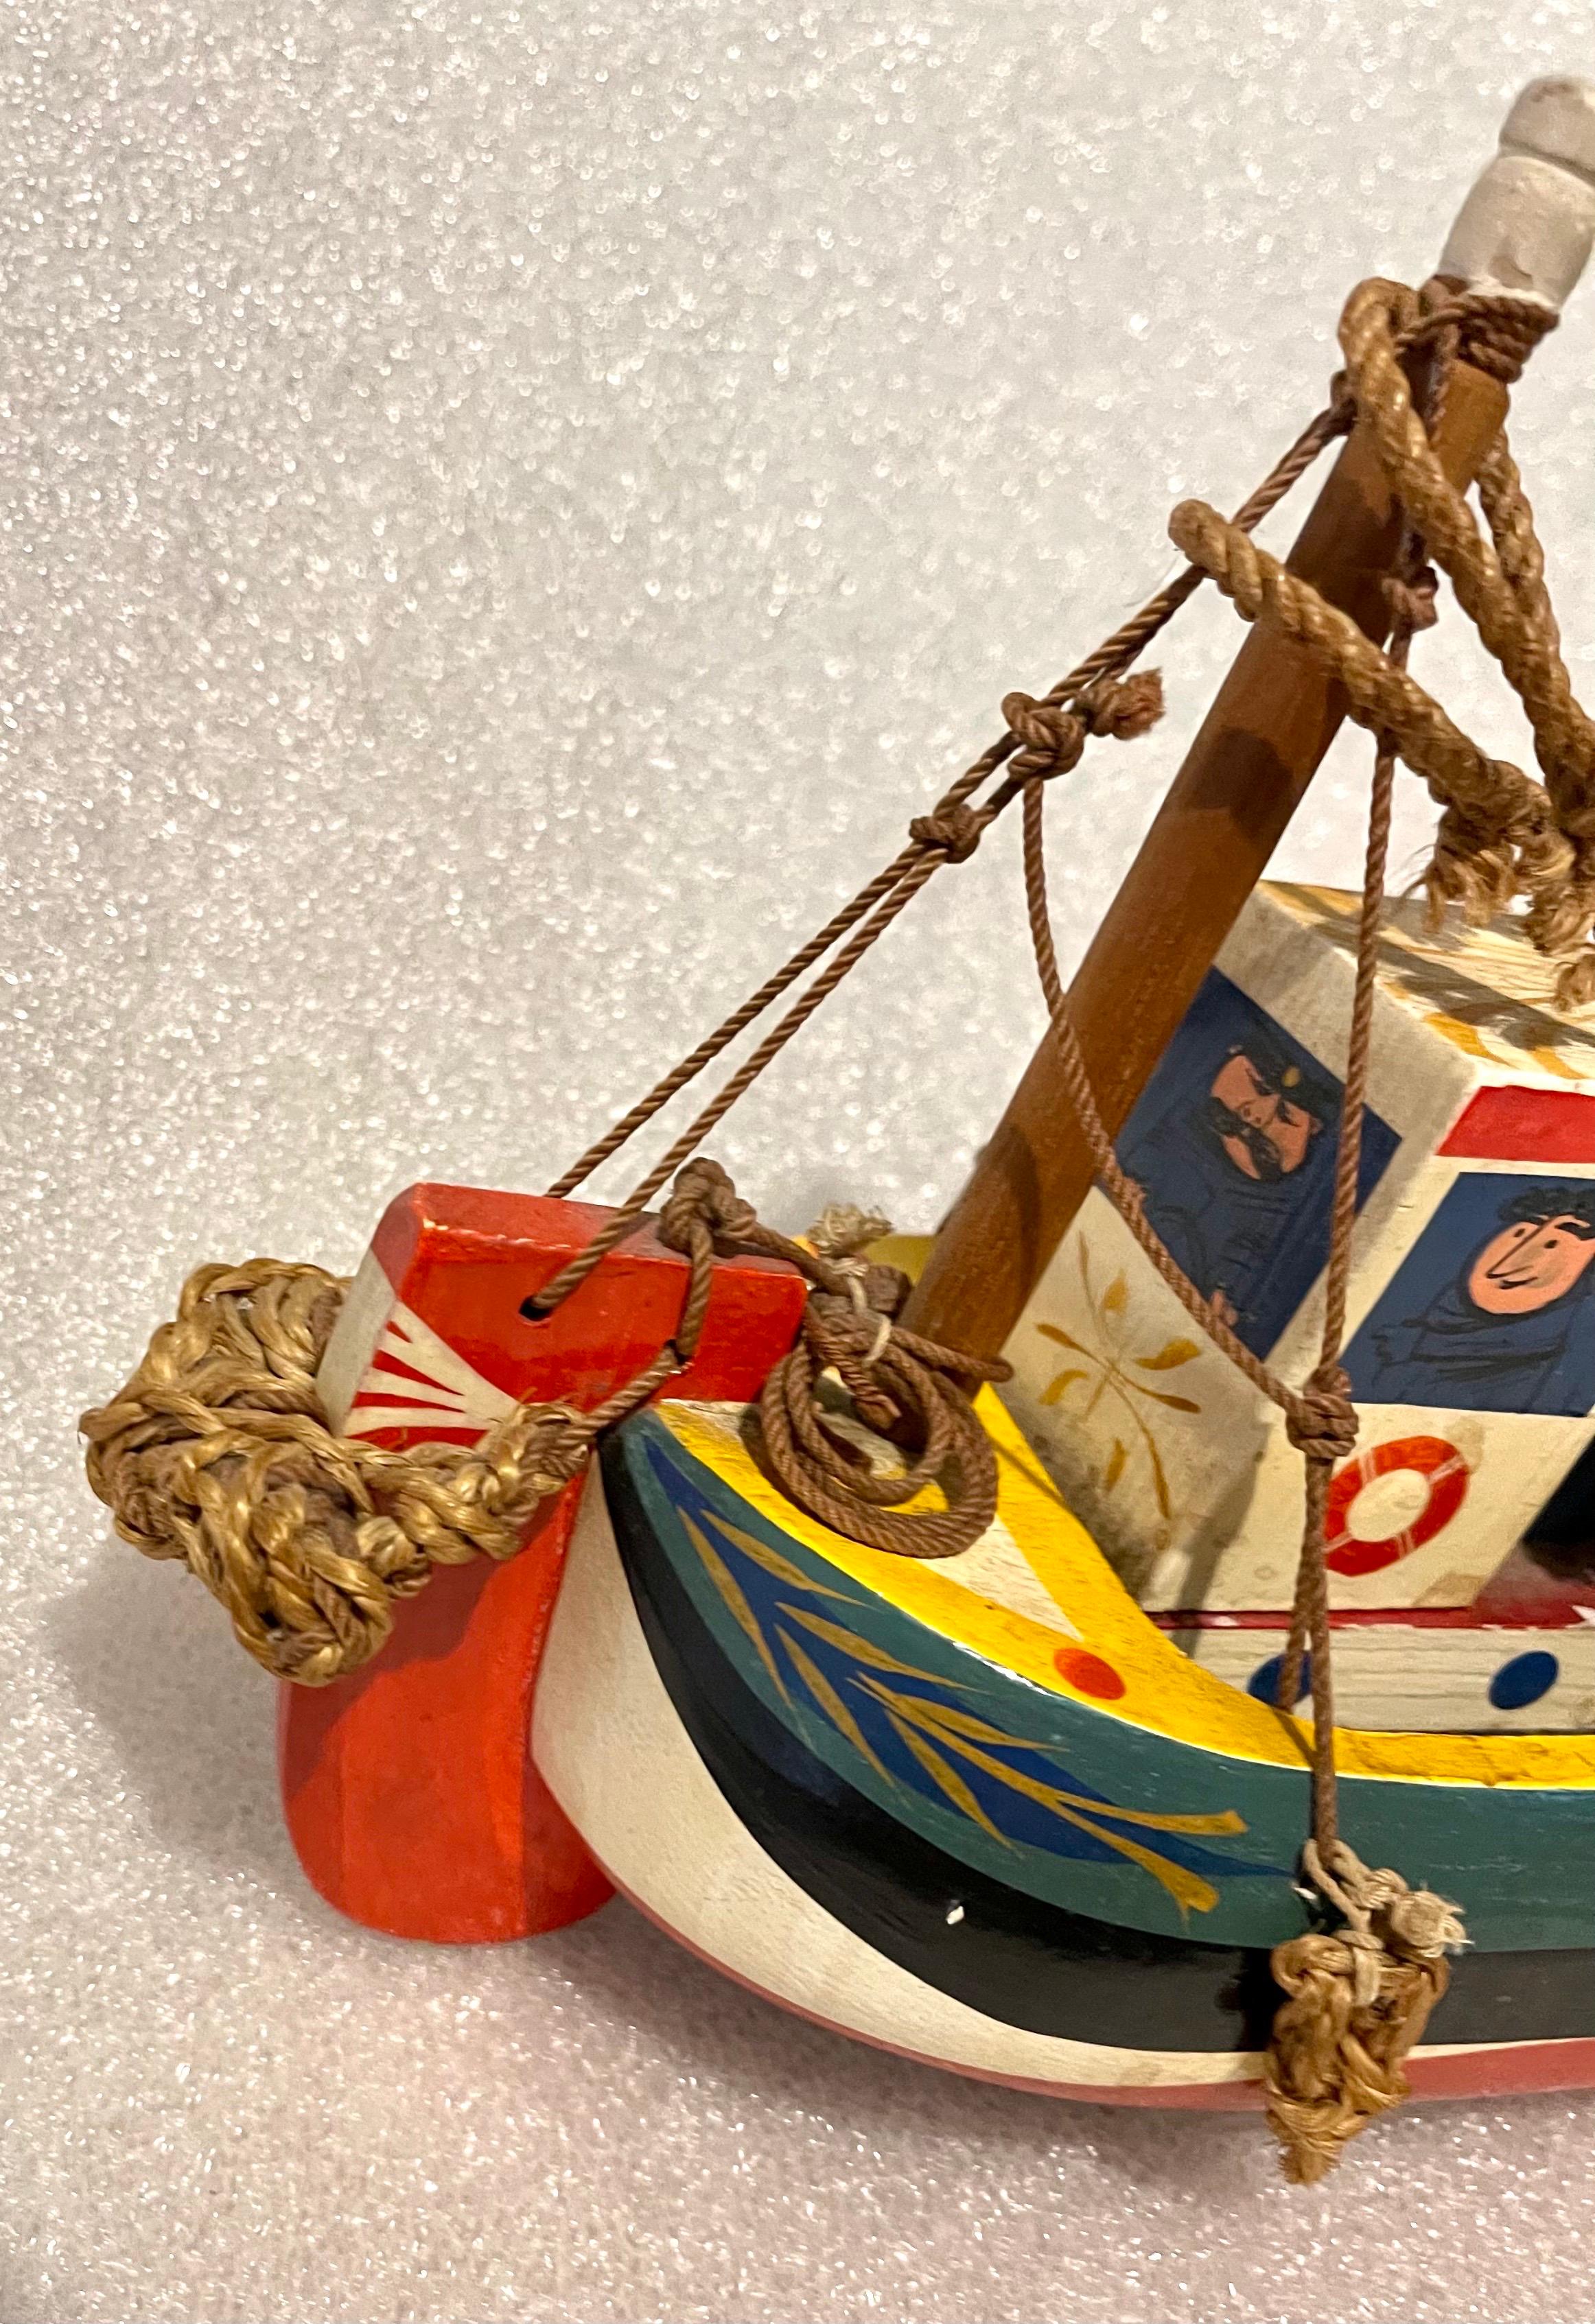 British Folk Art Whimsical Enamel Painted Carved Wood Model Ship Toy Sculpture 3